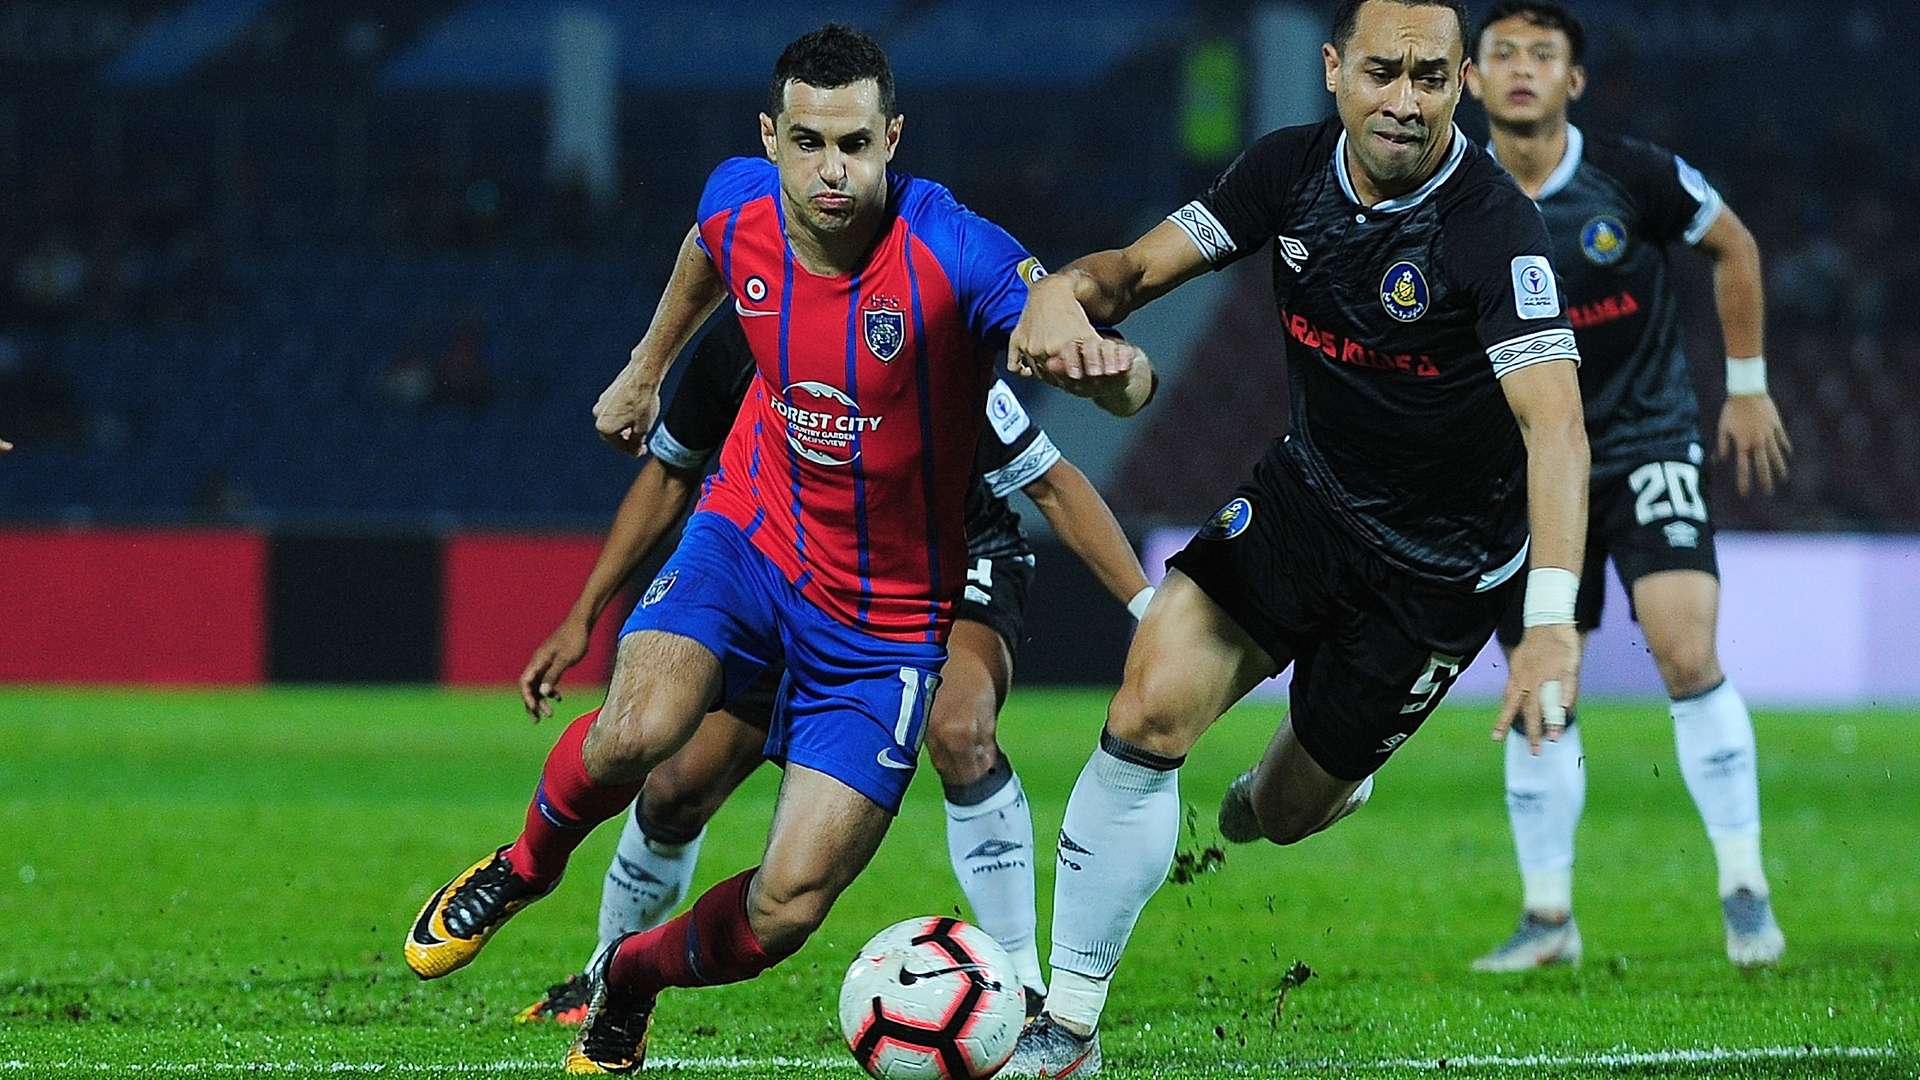 Norshahrul Idlan Talaha, Johor Darul Ta'zim v Pahang, Malaysia Super League, 14 May 2019